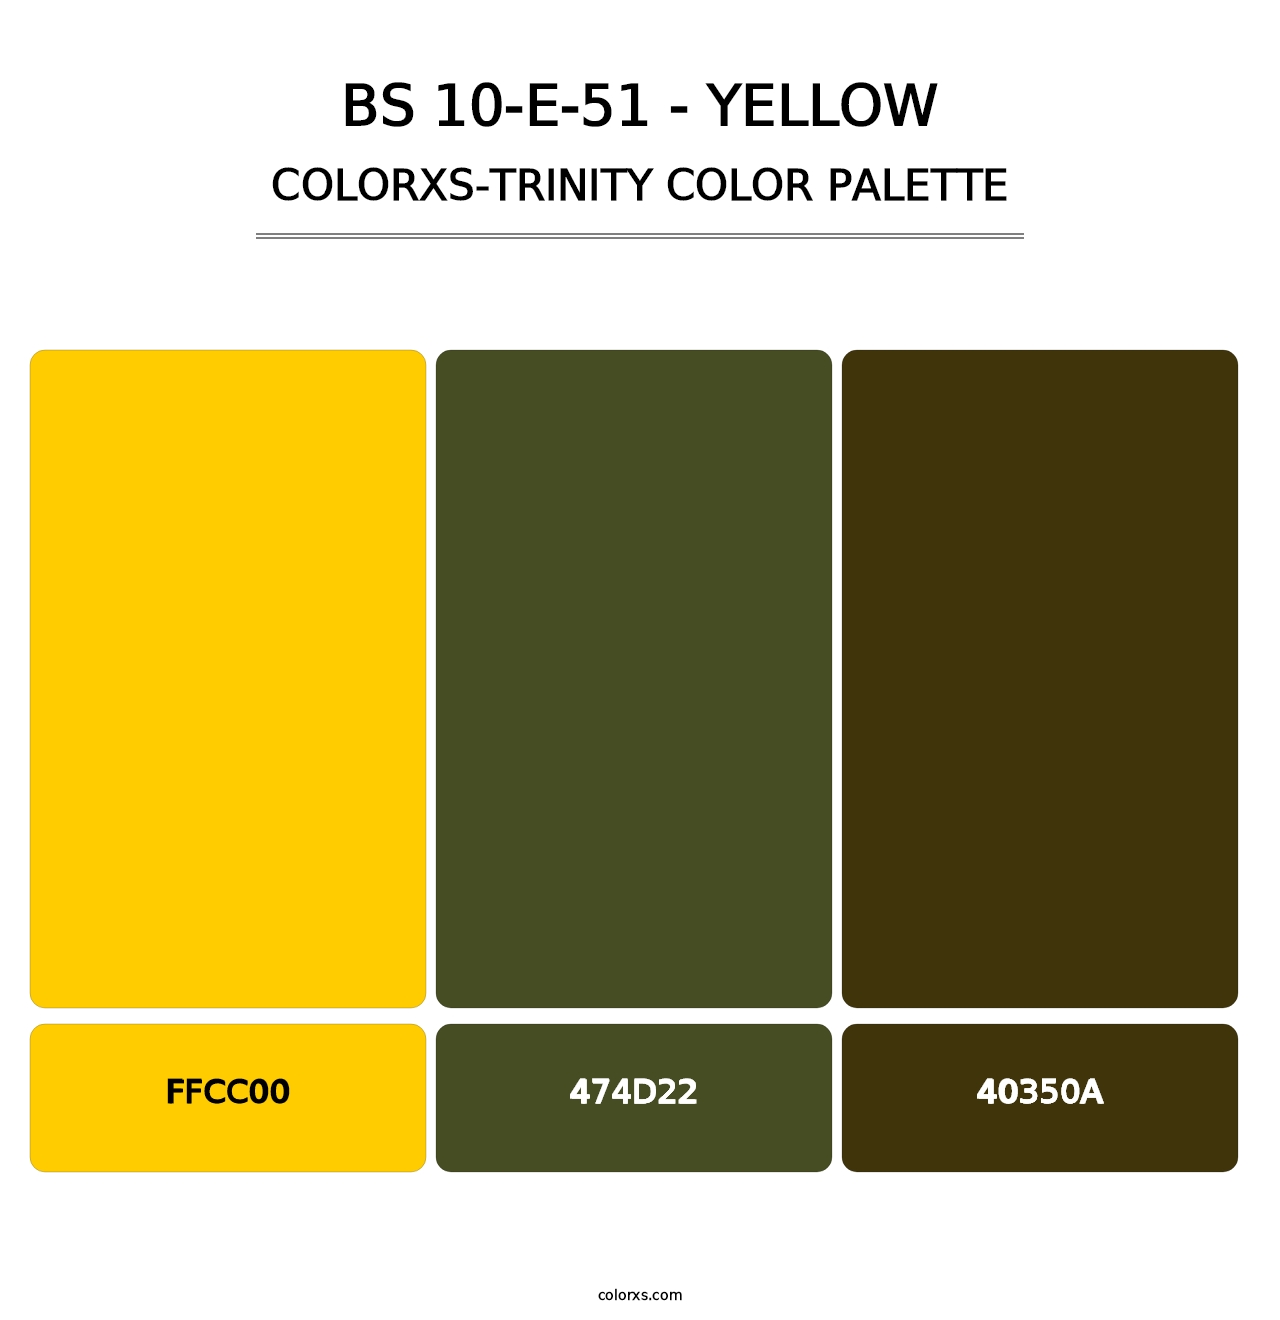 BS 10-E-51 - Yellow - Colorxs Trinity Palette